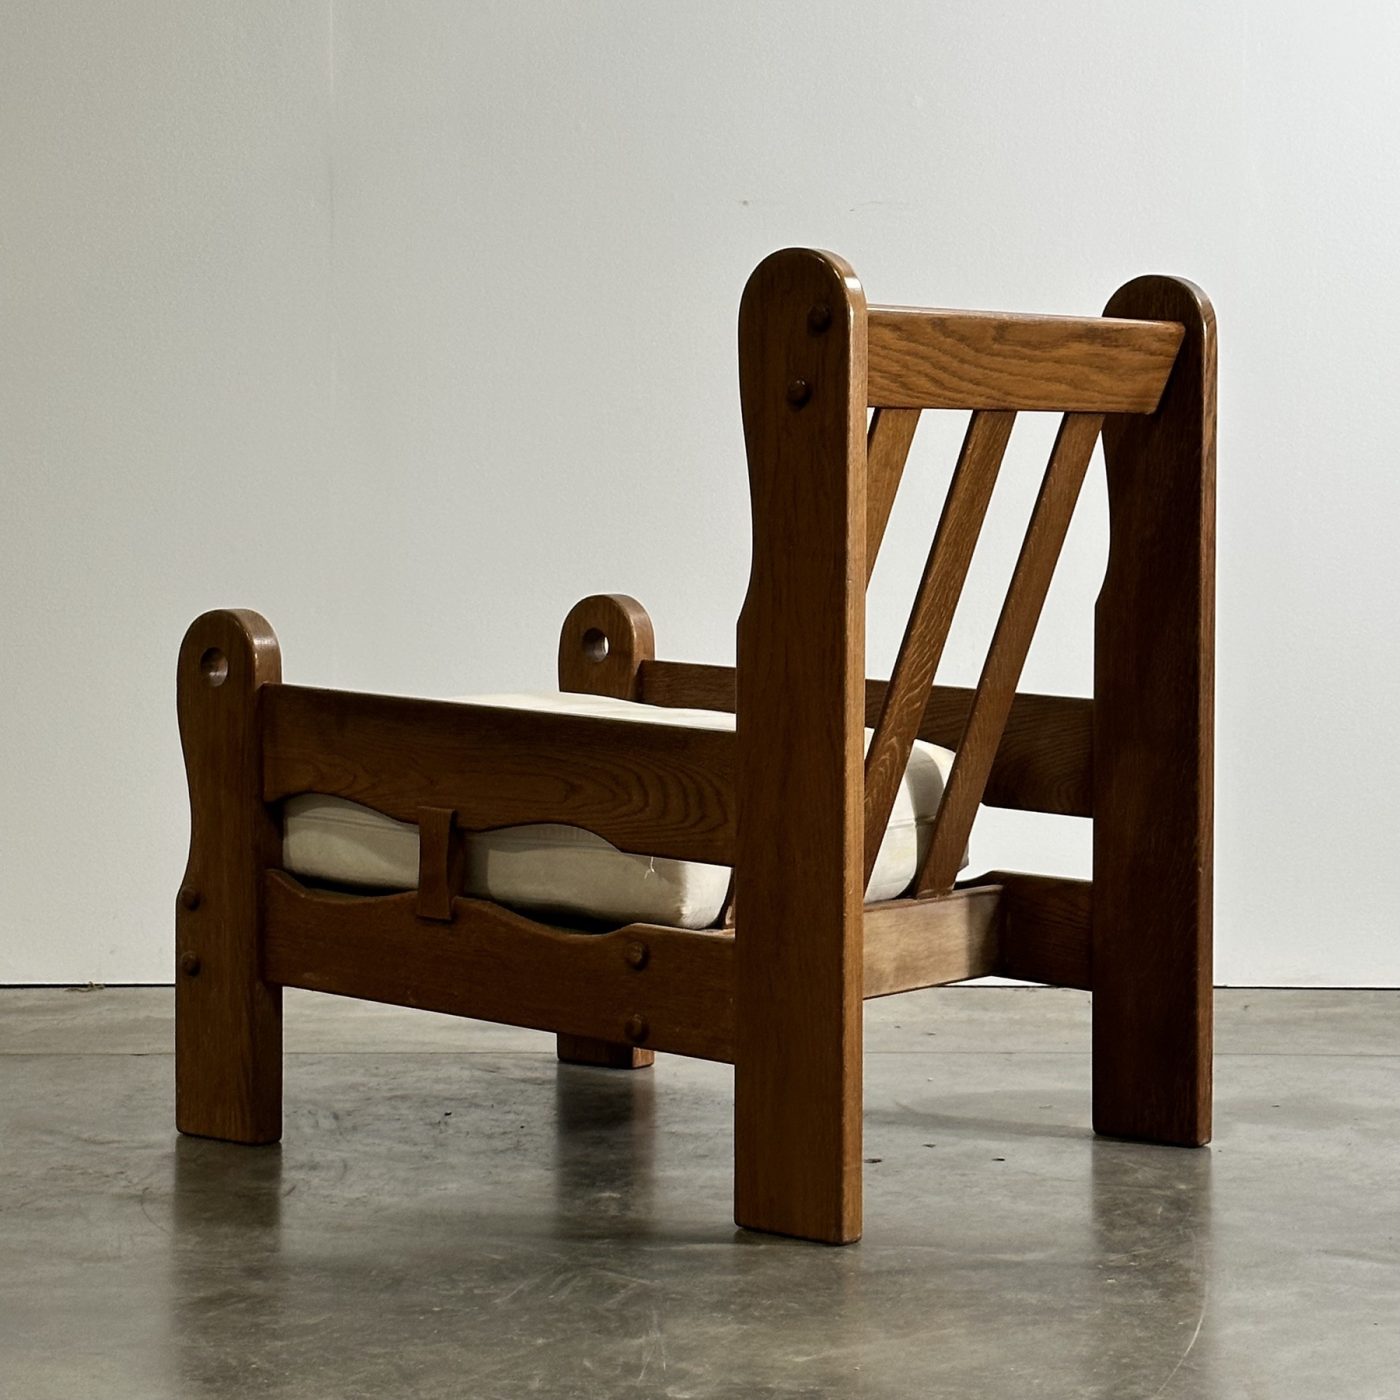 objet-vagabond-brutalist-armchairs0000